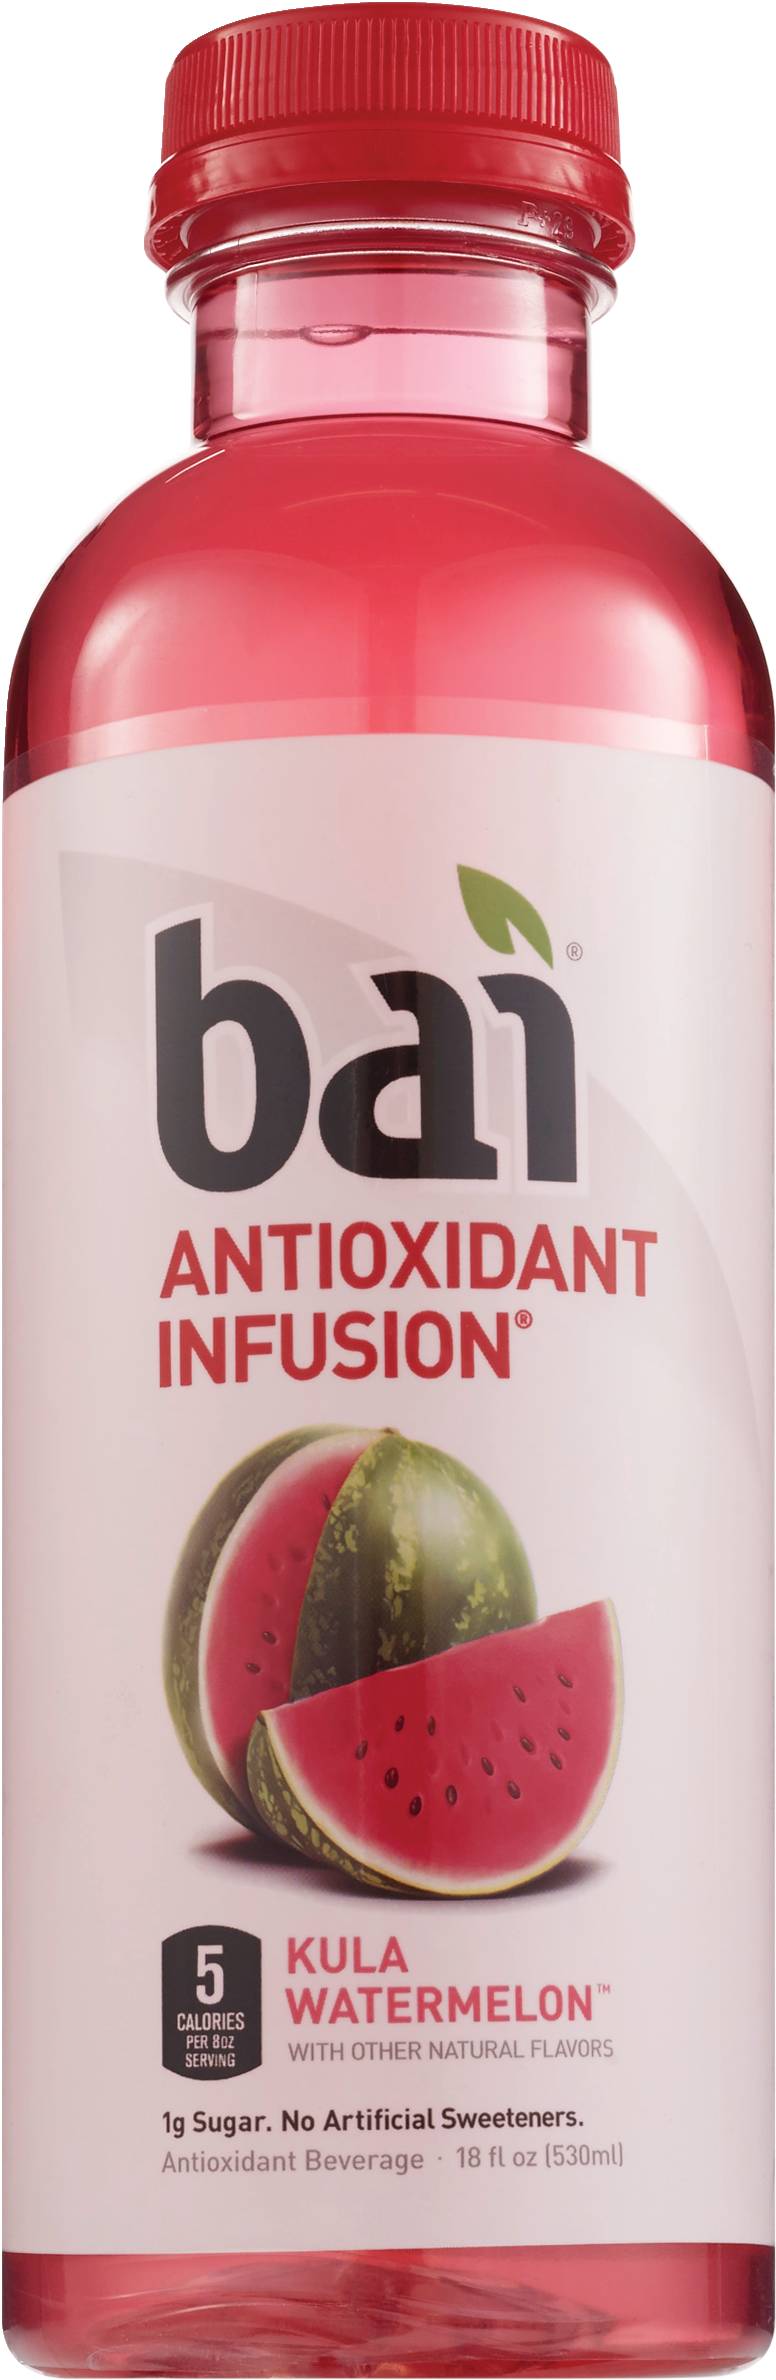 Bai Antioxidant Infusion Kula Watermelon Water, 18 OZ